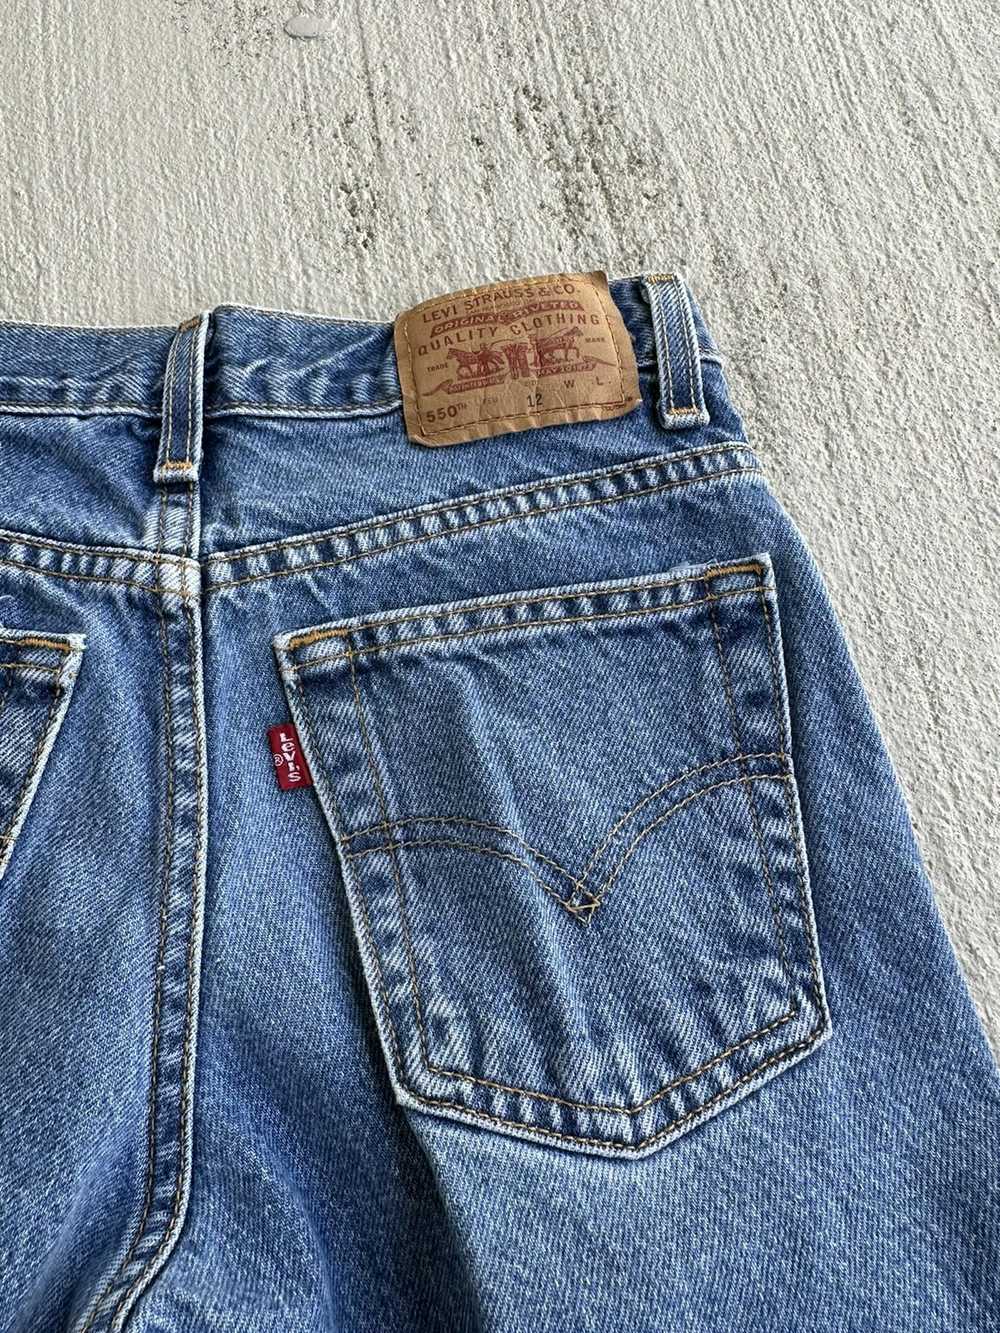 Levi's × Streetwear × Vintage Vintage Levi’s Jeans - image 4